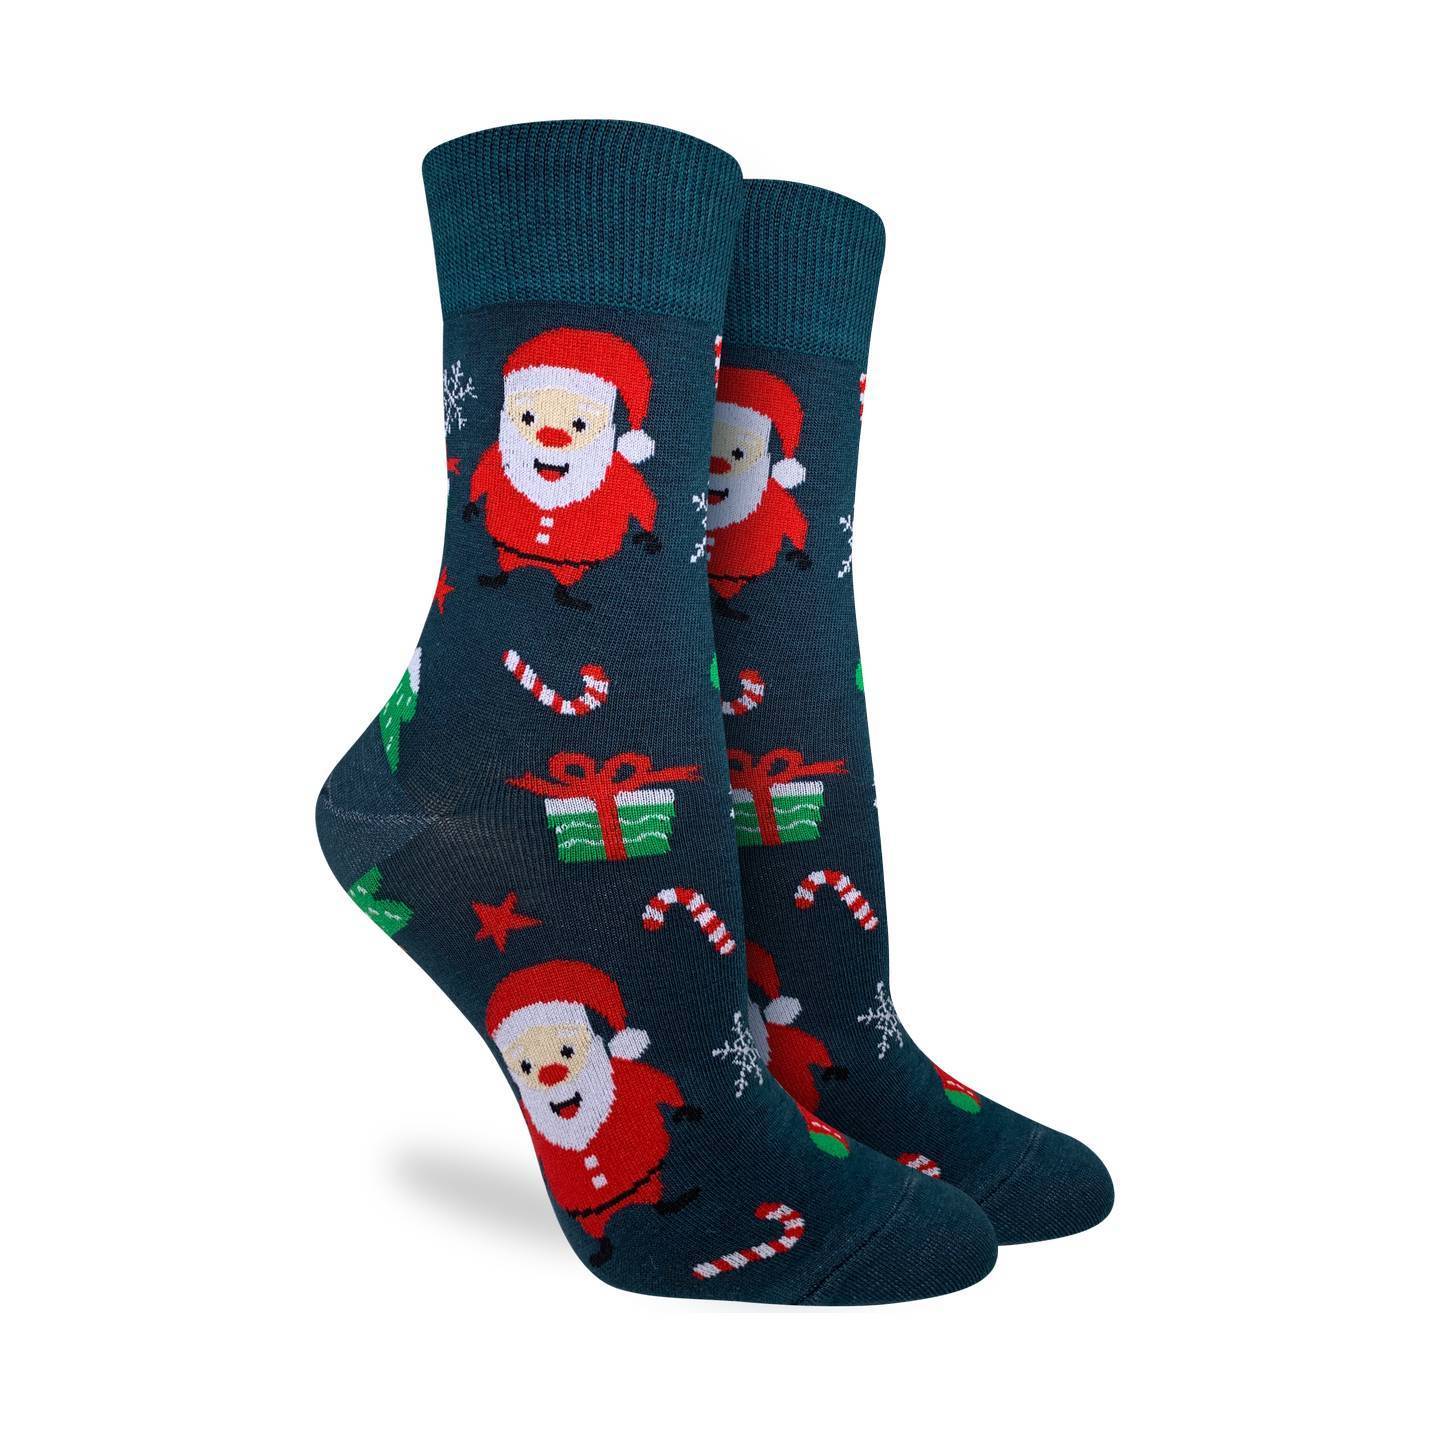 Santa and Rudolph Crew Socks - Women's 5-9